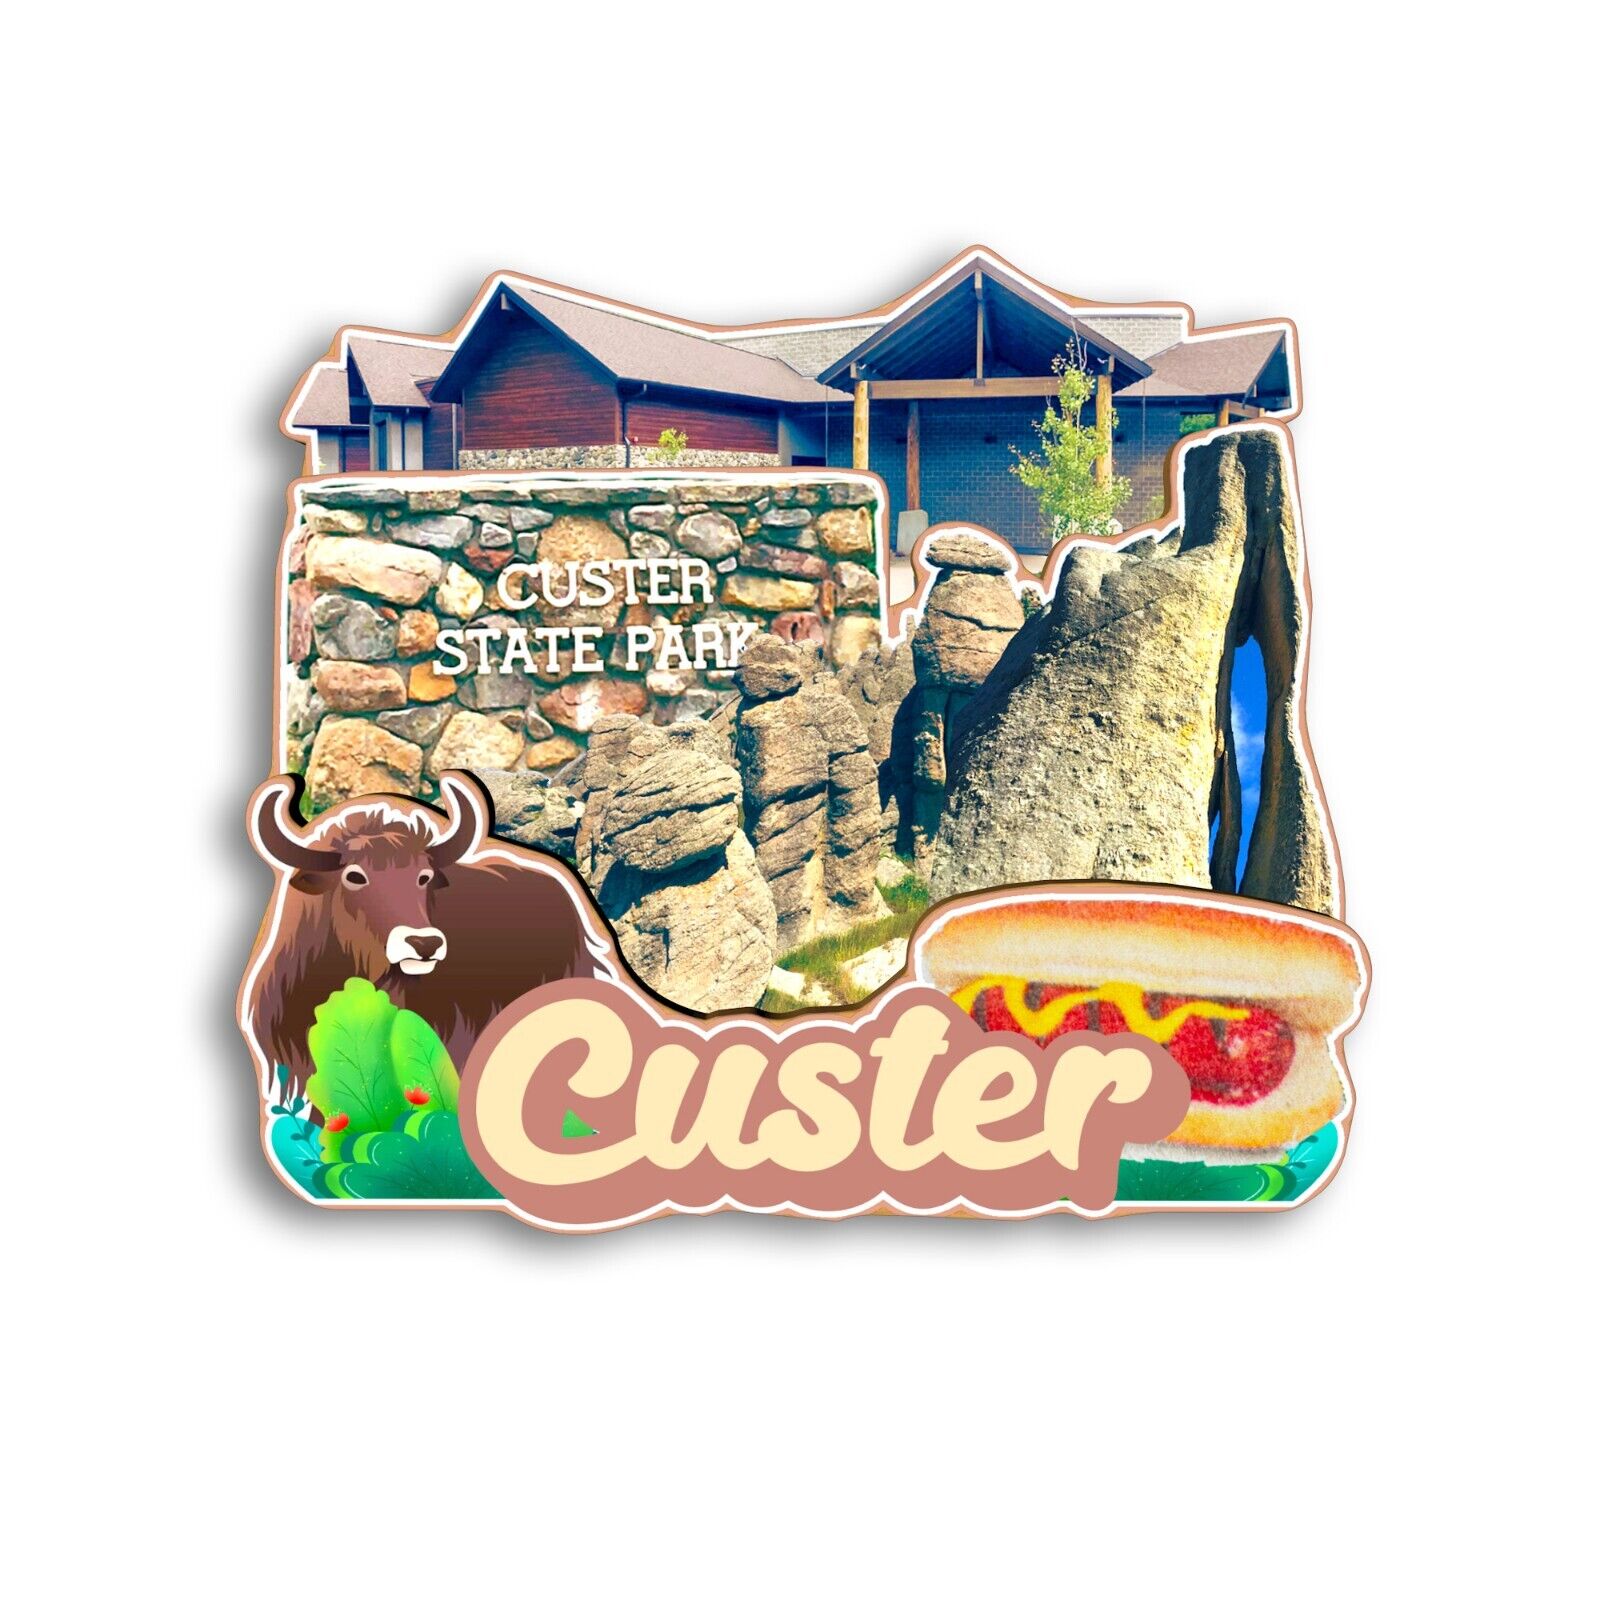 Custer South Dakota USA Refrigerator magnet 3D travel souvenirs wood craft